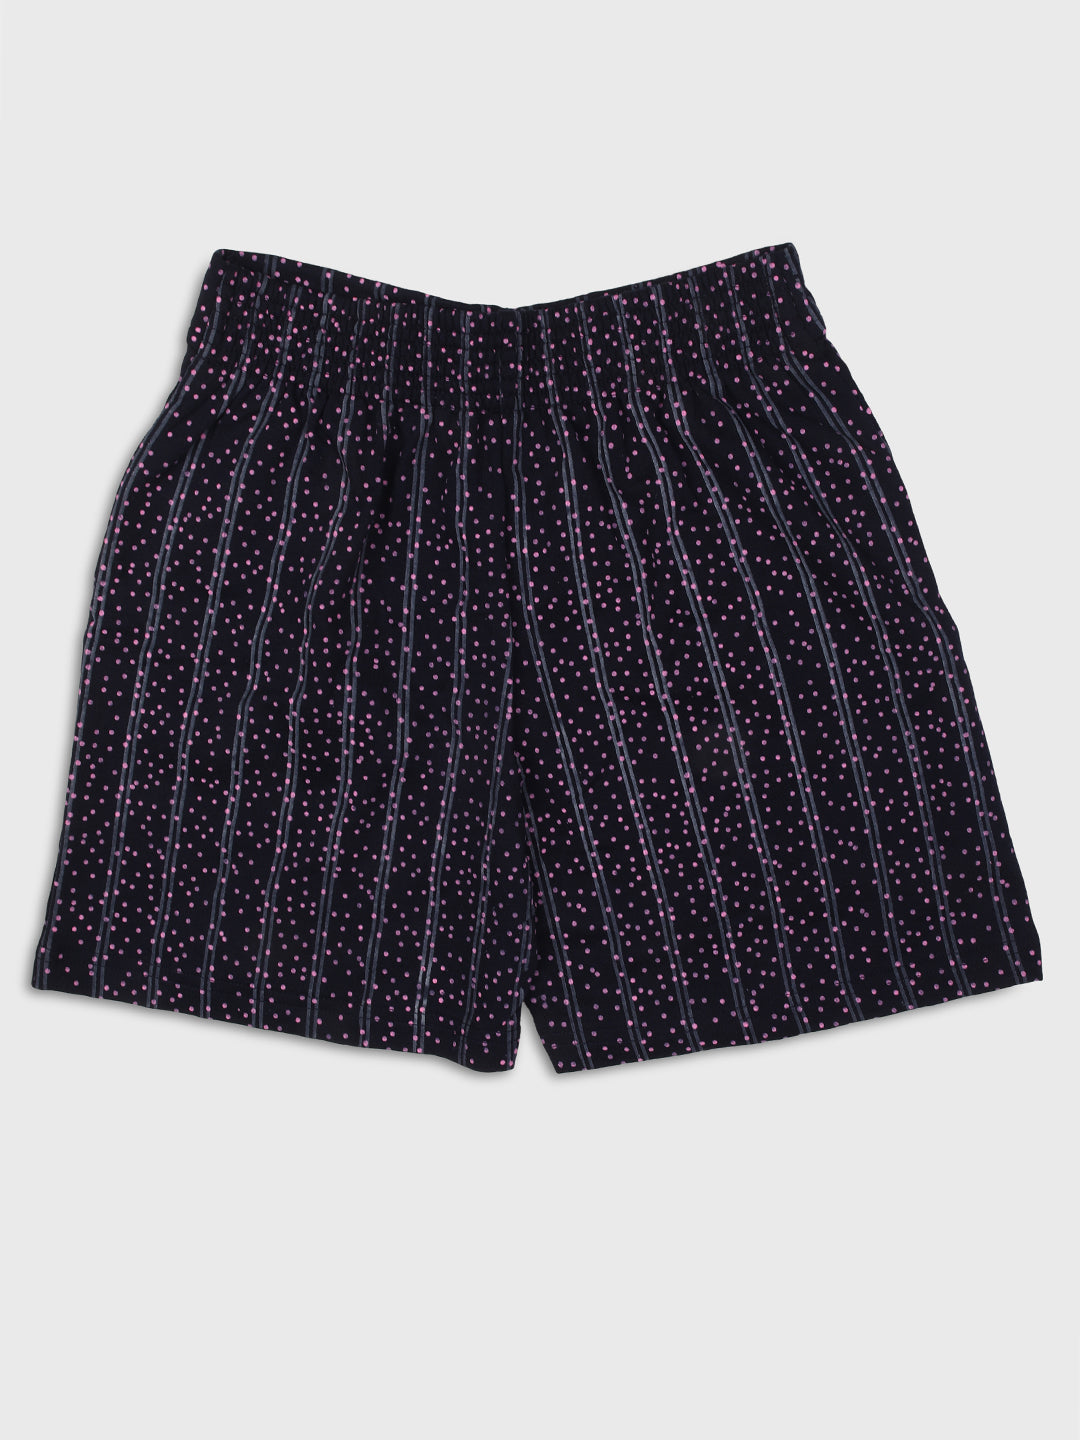 Nins Moda Girls Dot Printed Shorts-Navy